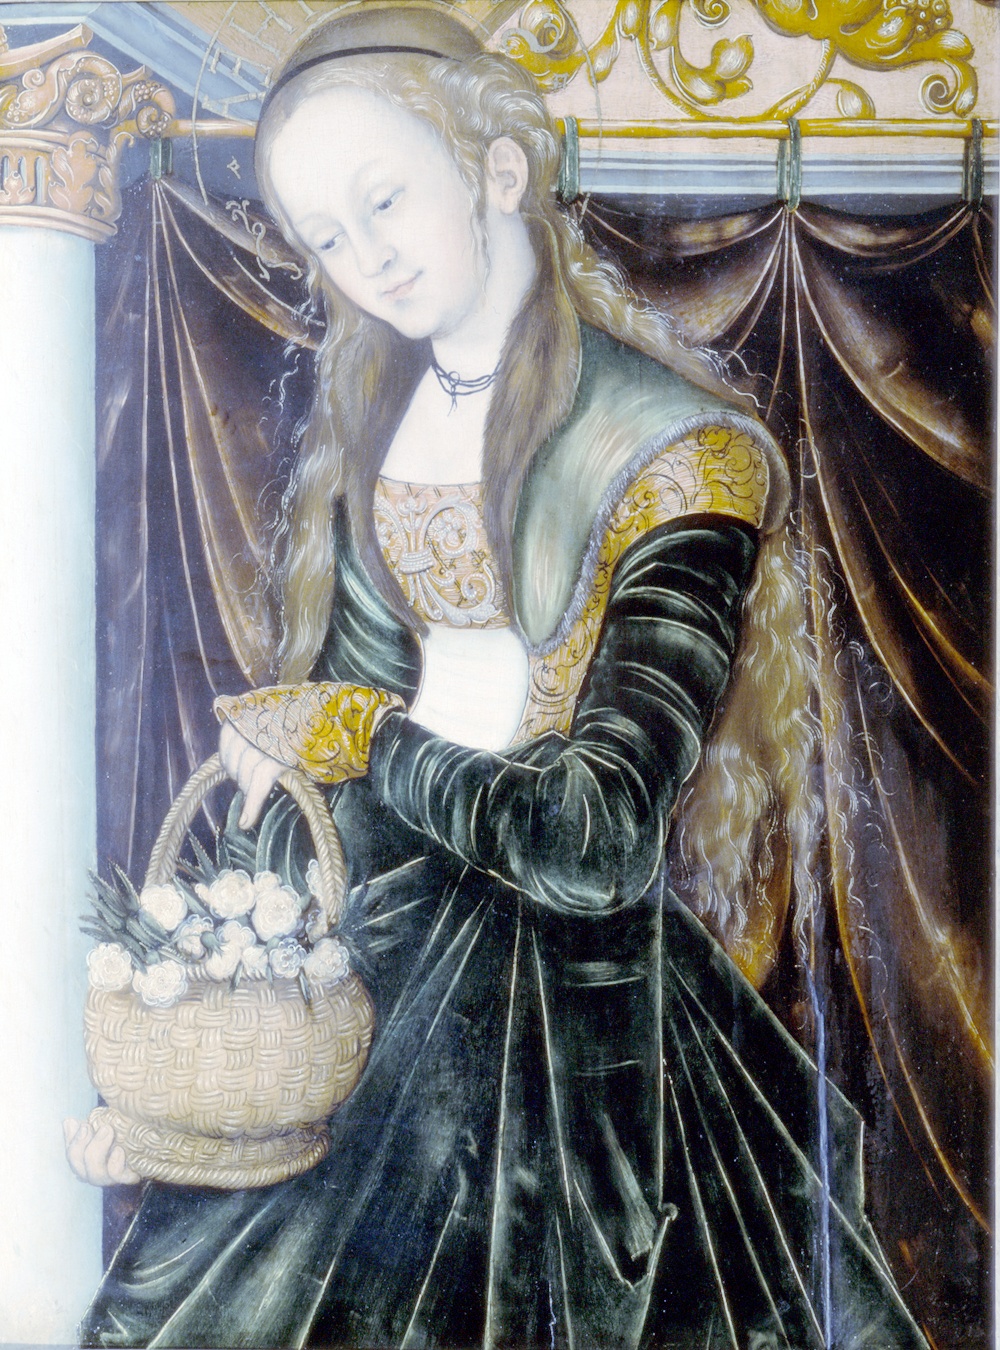 a Thessara Eldusaer painting of a woman holding a basket